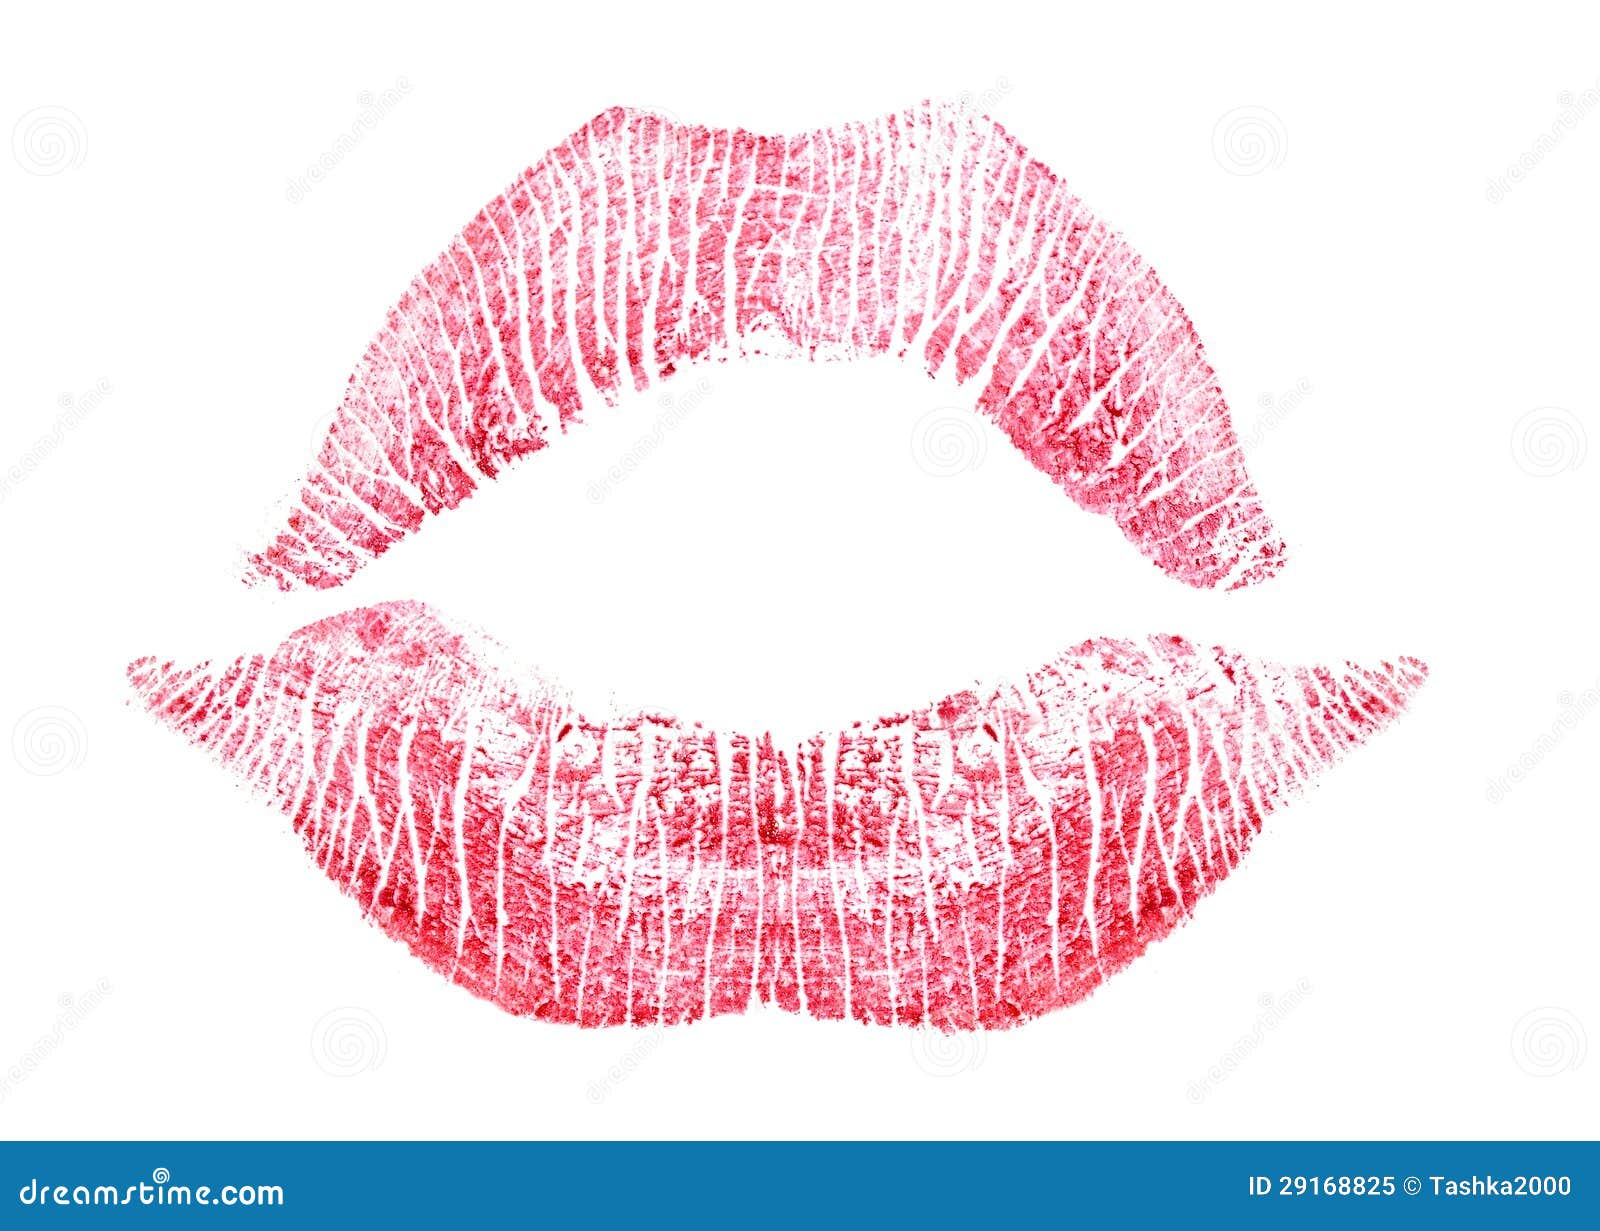 clipart red lipstick kiss - photo #47